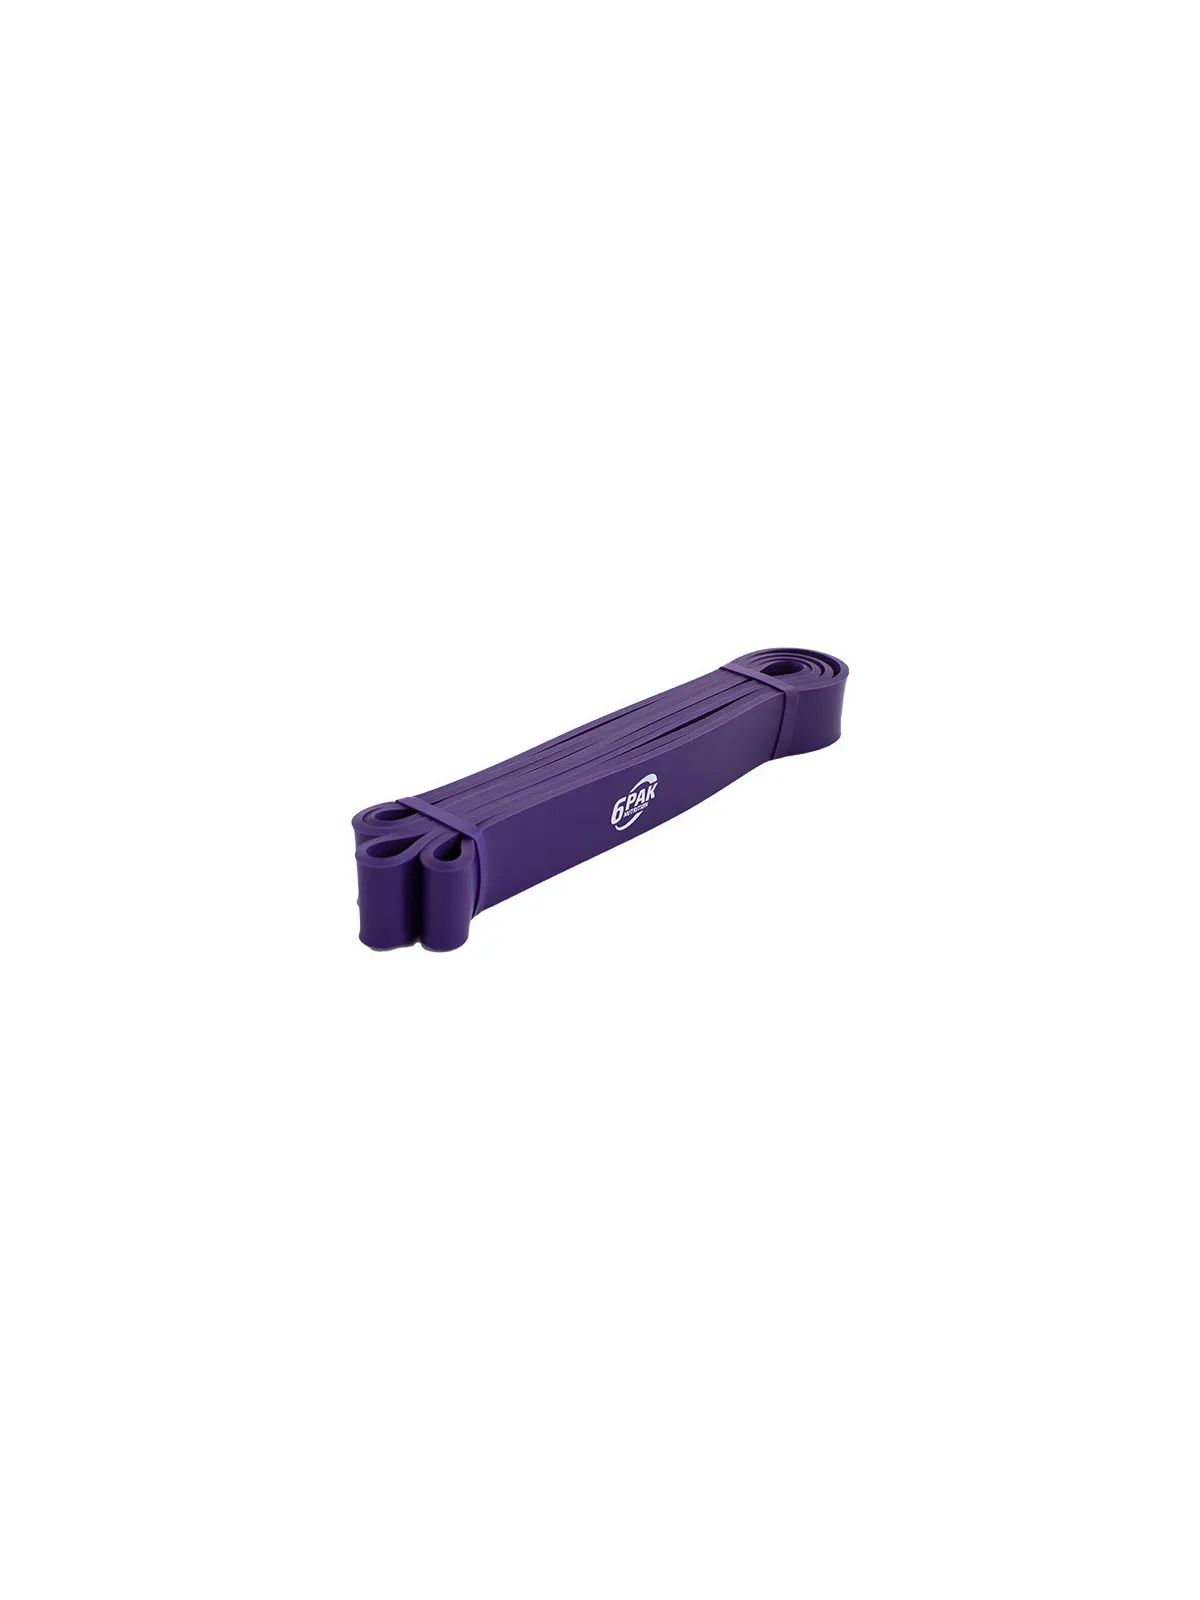 Guma oporowa fioletowa - opór 18-36 kg - LATEX 042 Purple